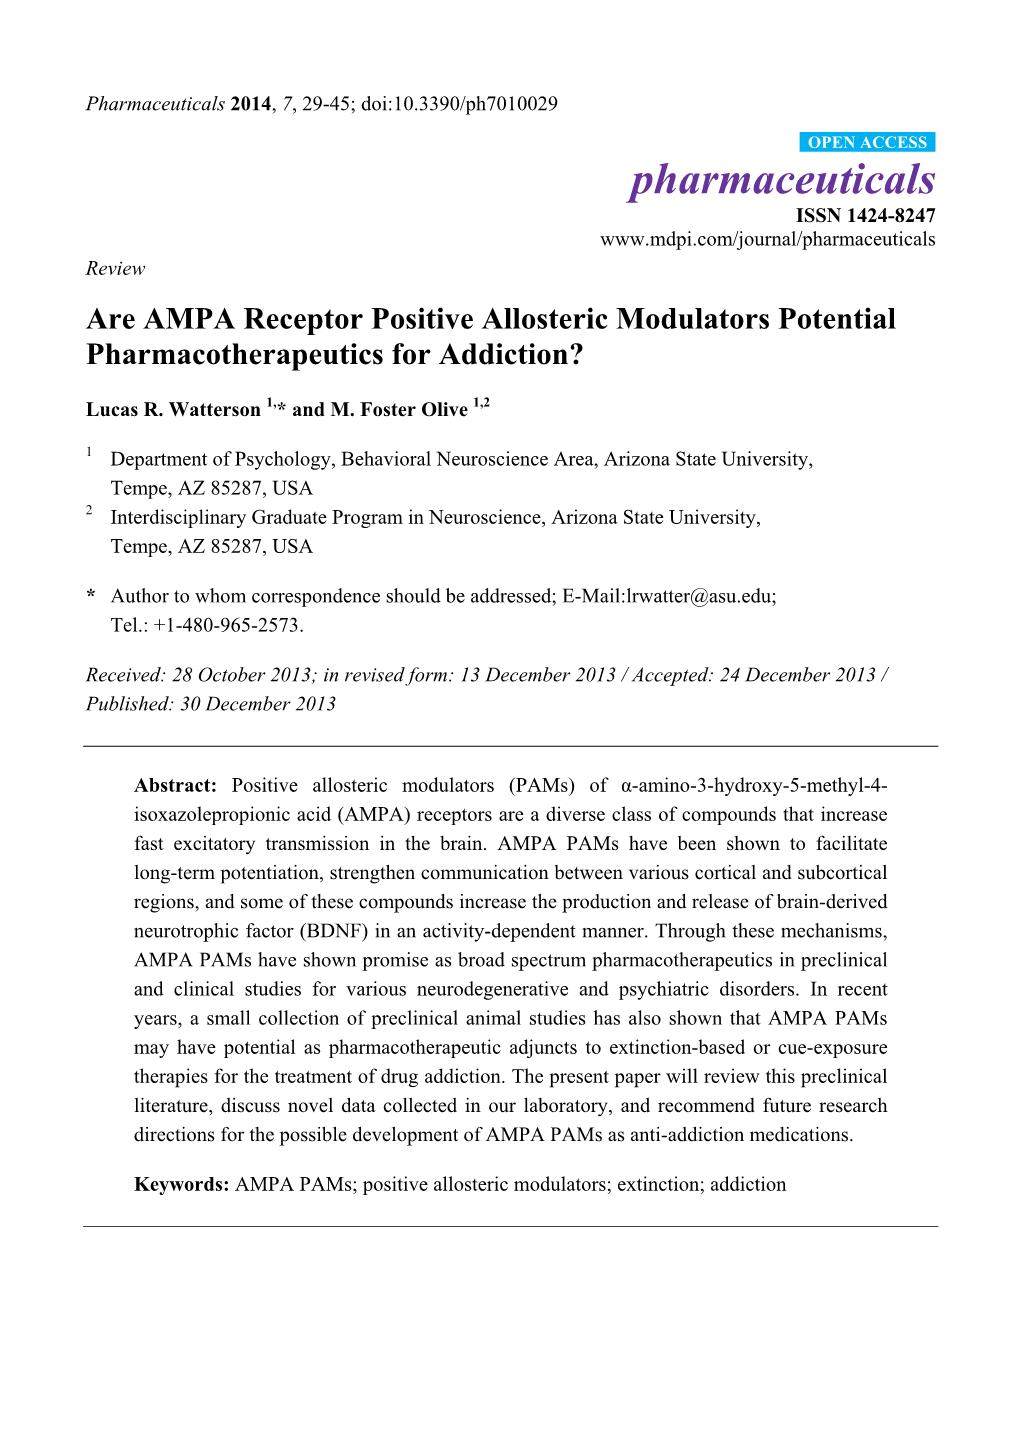 Are AMPA Receptor Positive Allosteric Modulators Potential Pharmacotherapeutics for Addiction?